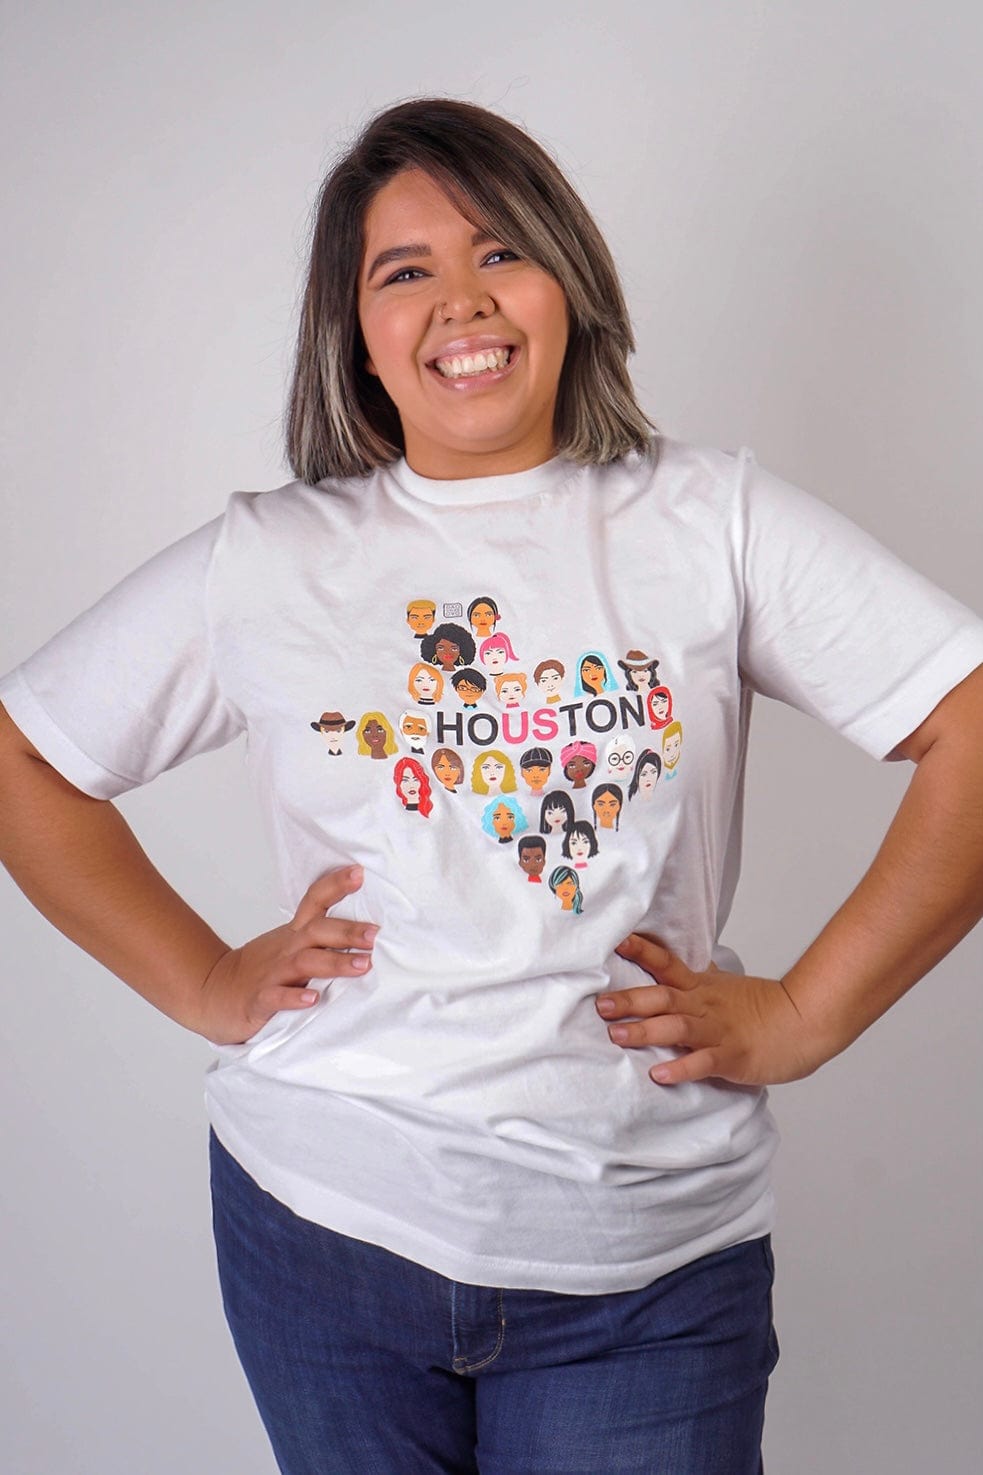 Chloe Dao TOPS Houston Us T-Shirt in White